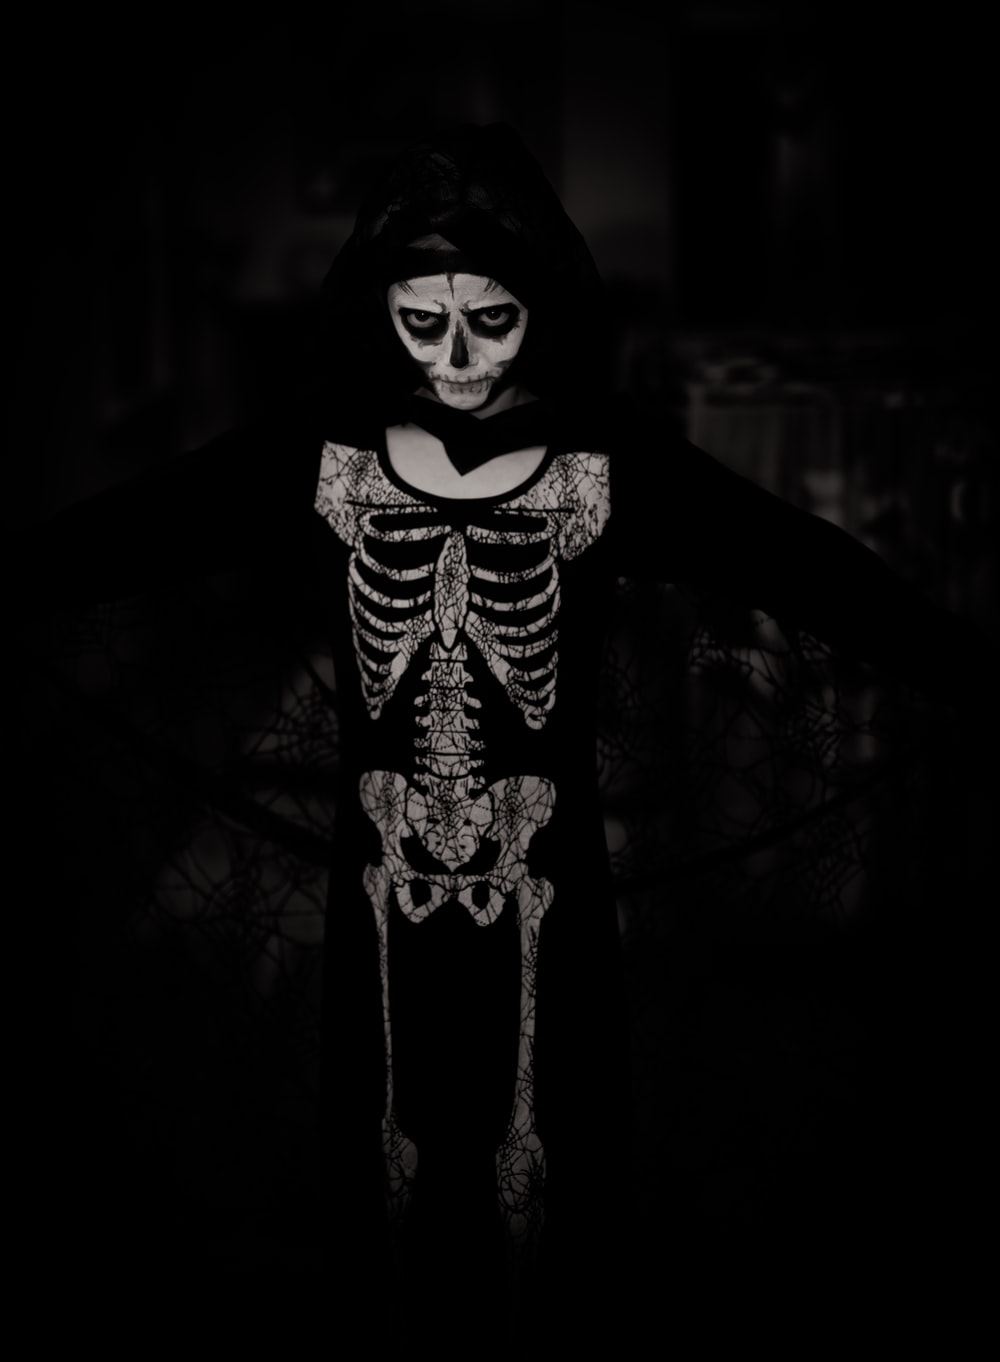 Skeleton Picture [HD]. Download Free Image